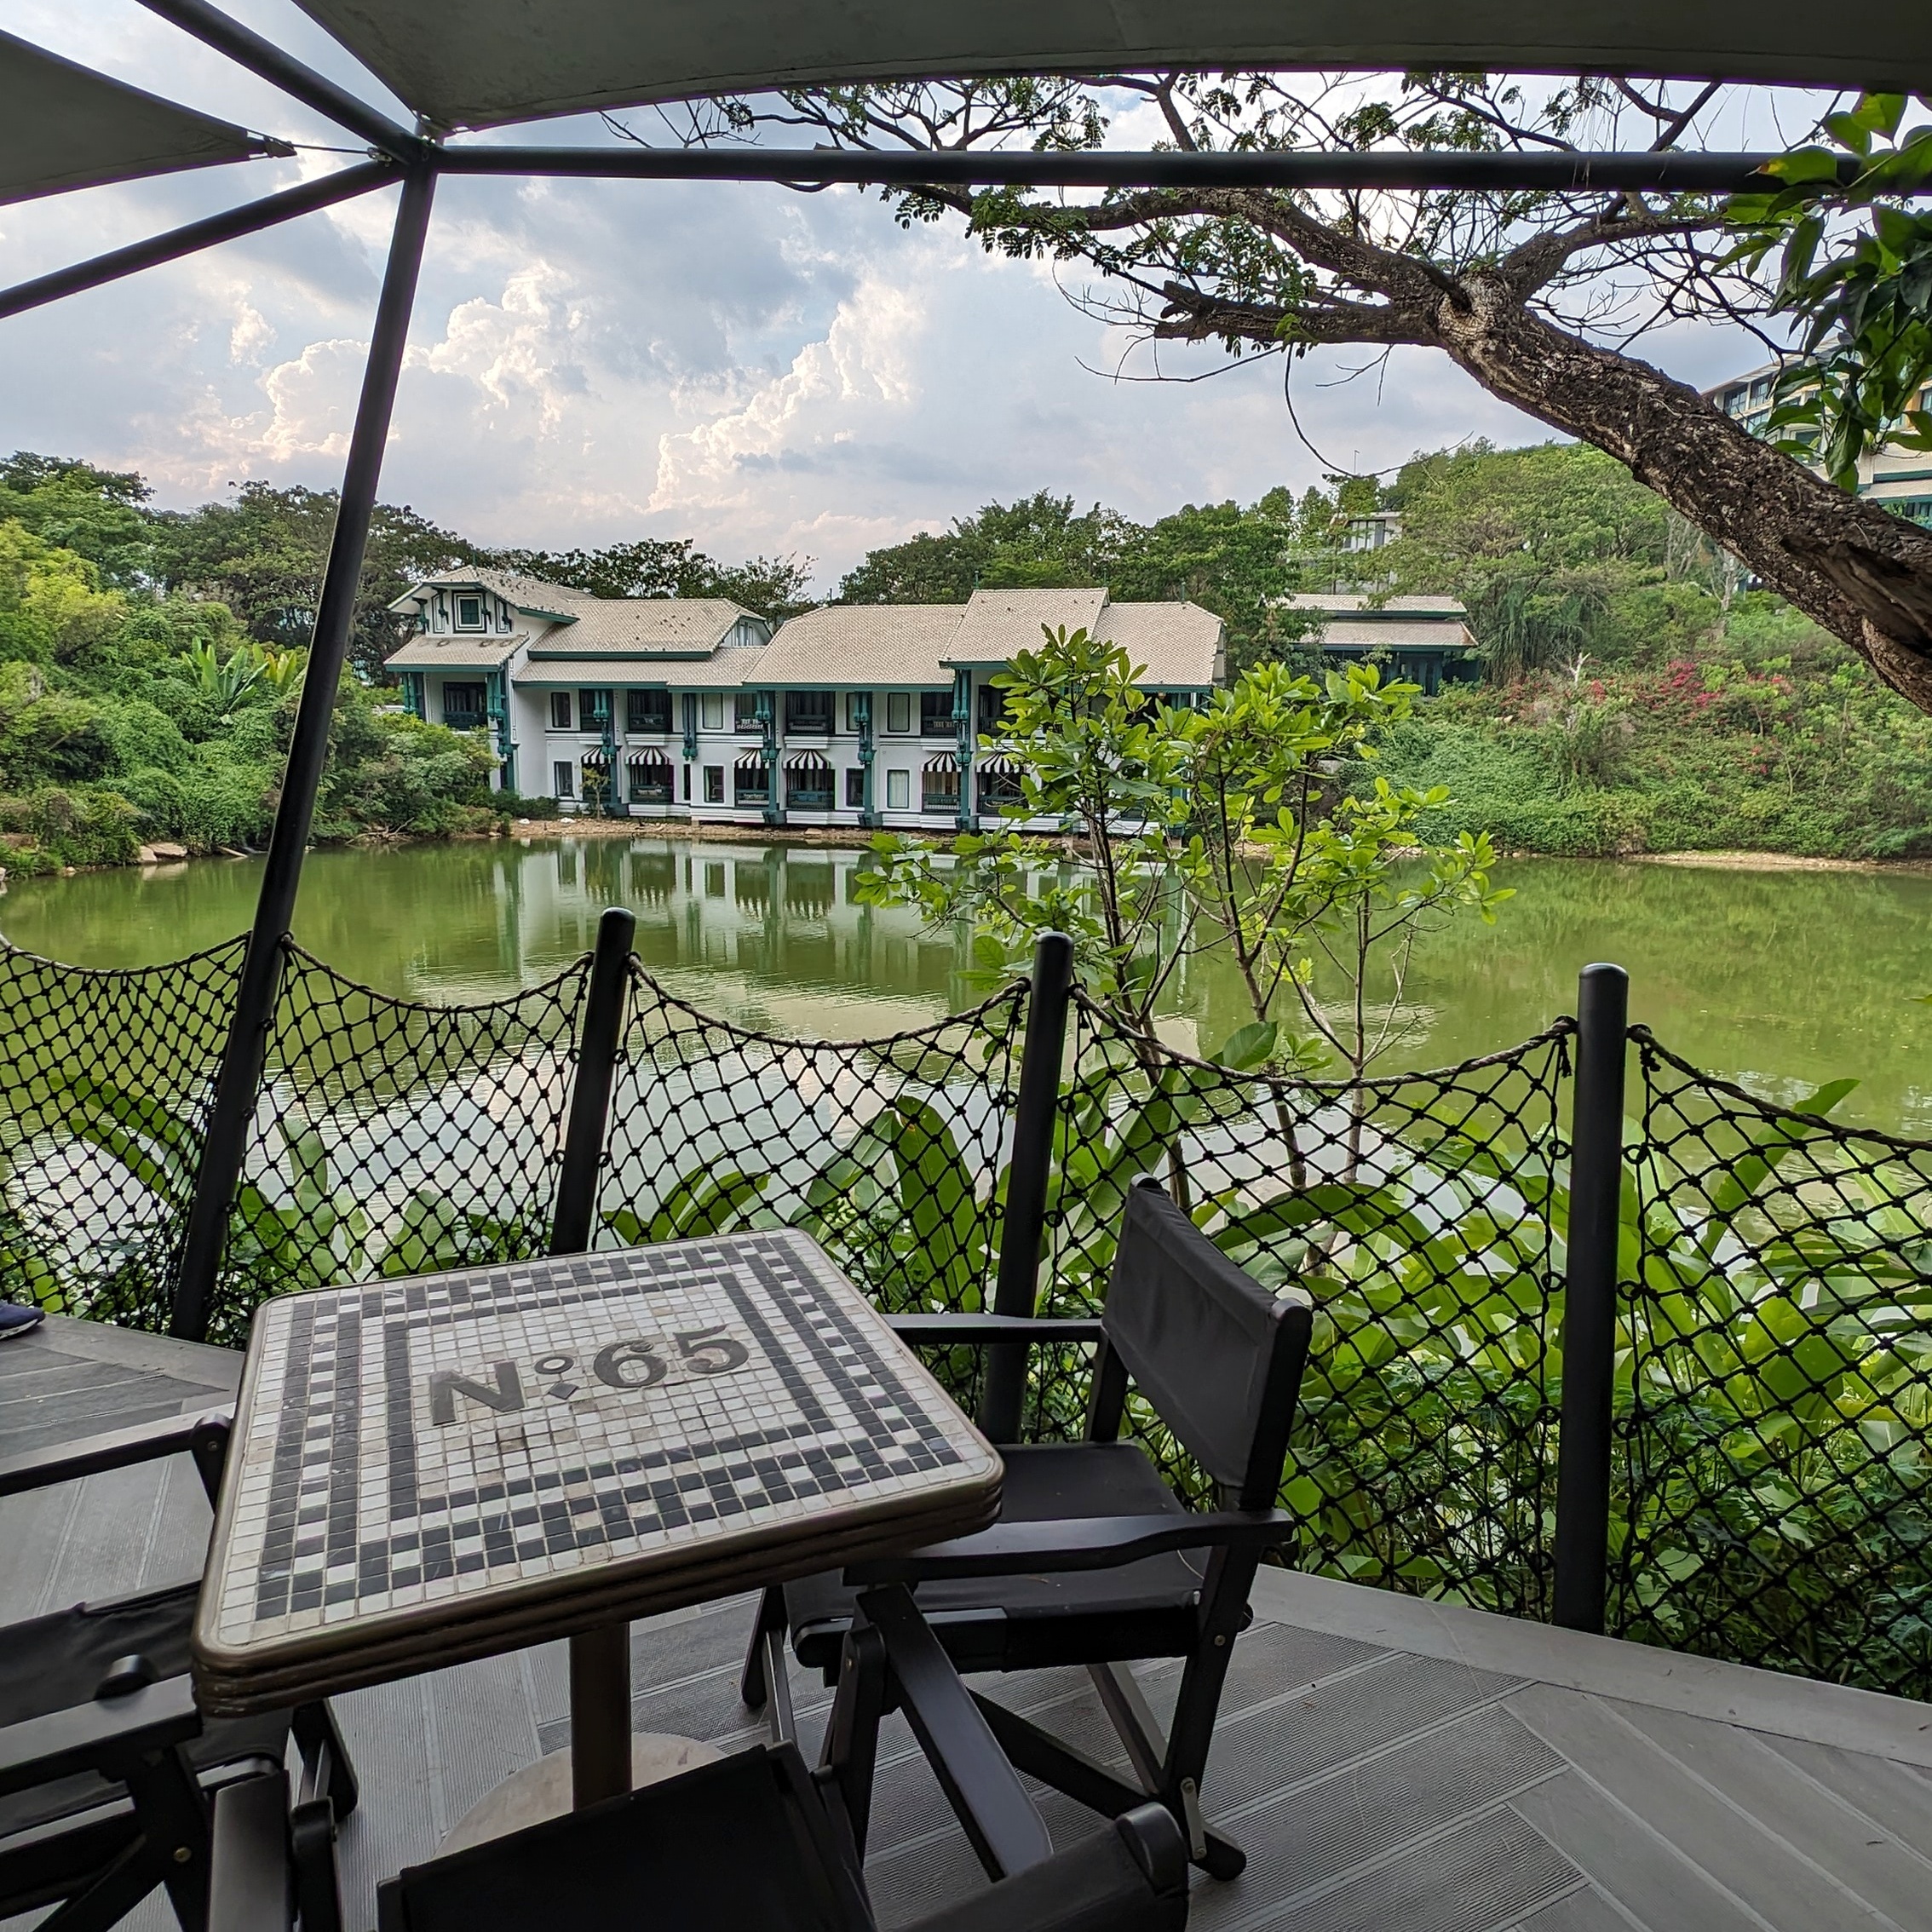 InterContinental Khao Yai Resort Tea Carriage